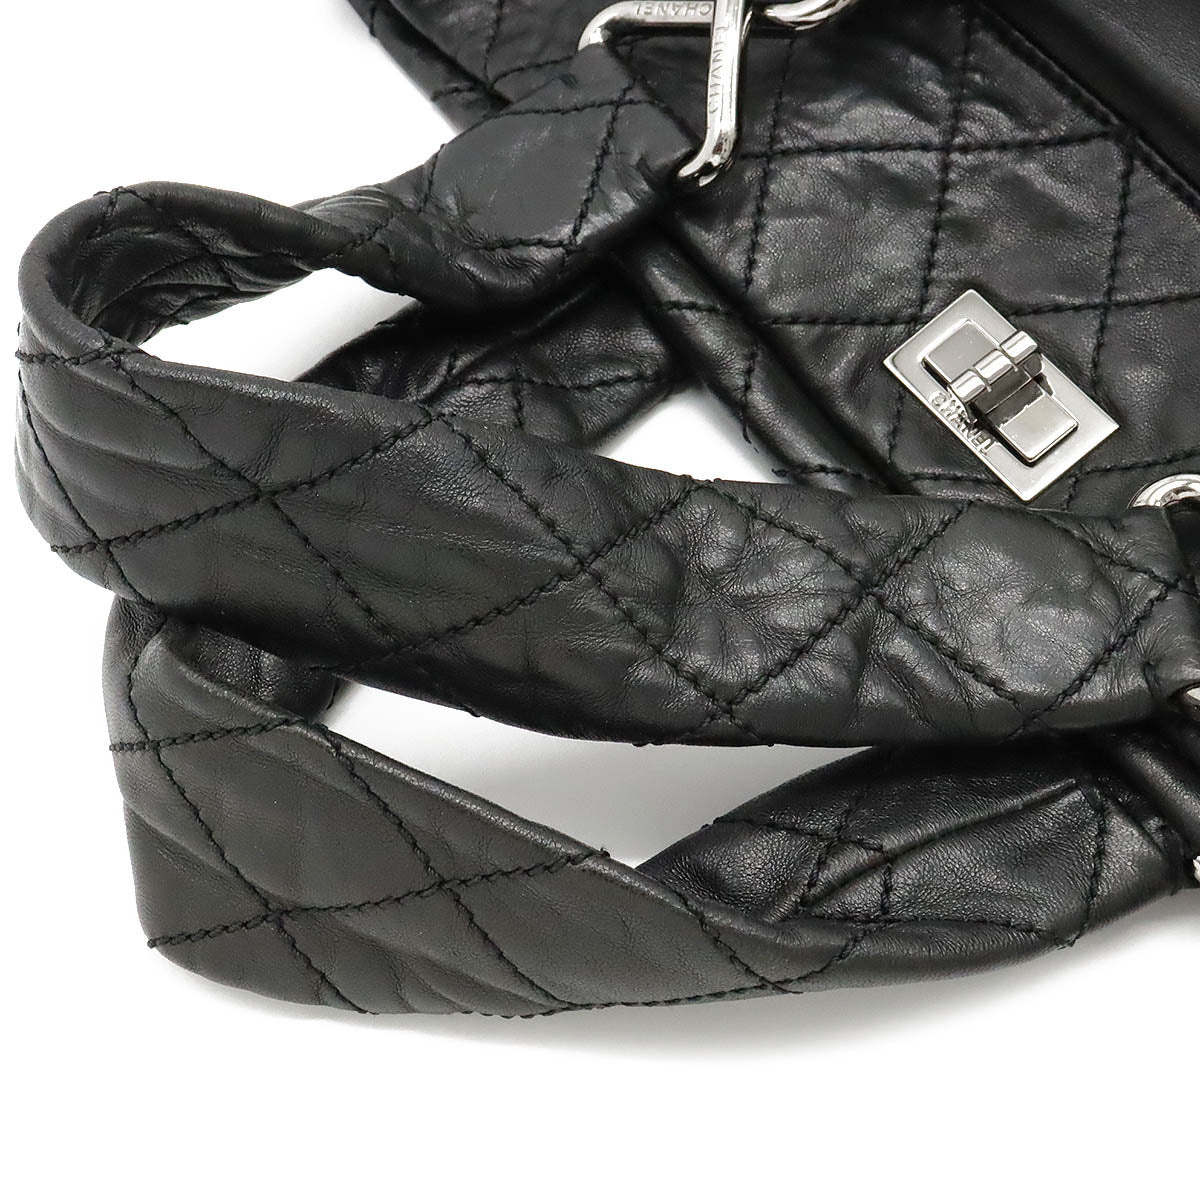 CHANEL CHANEL 2.55 Mattress  Bag Handbag Turn-Lock Leather Black Black Silver Gold